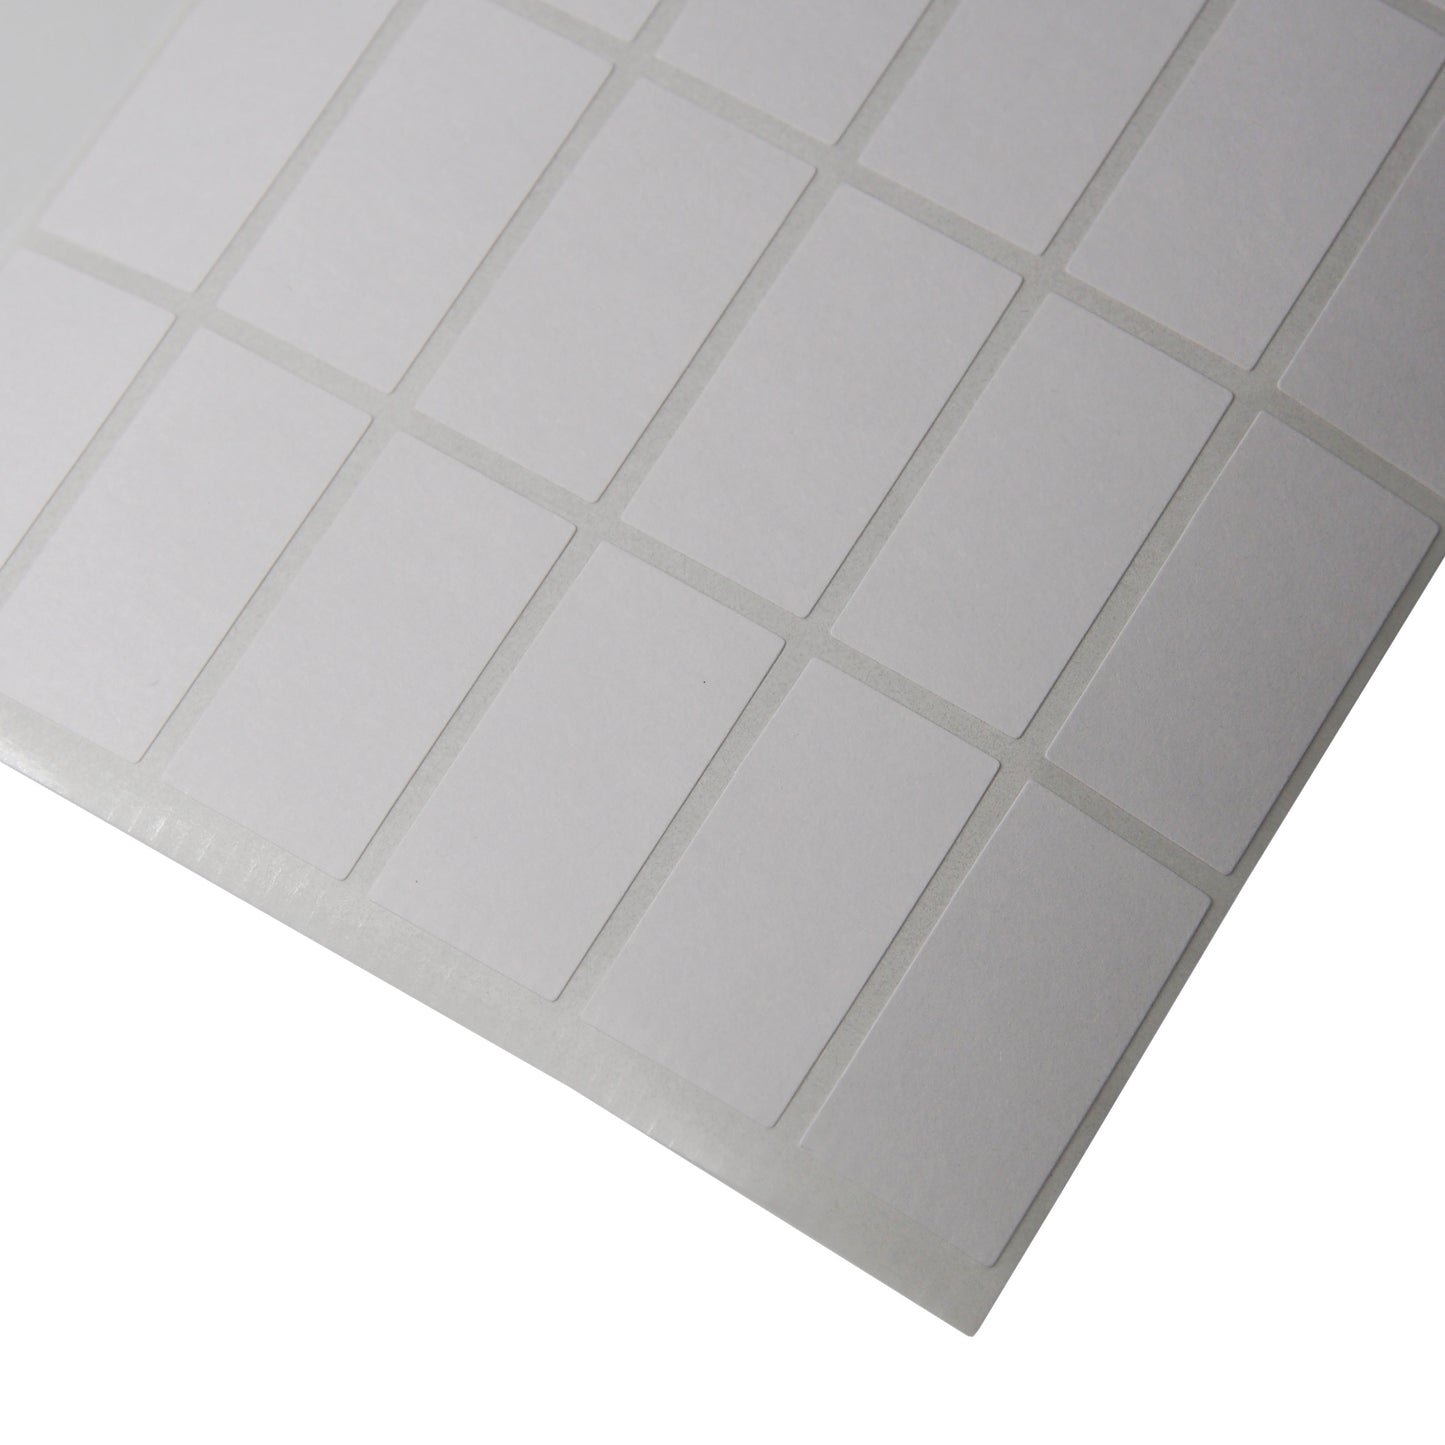 Corner of the sheet of Rectangular Self Adhesive Plain Label - 1000 Labels (1/2" x 1")